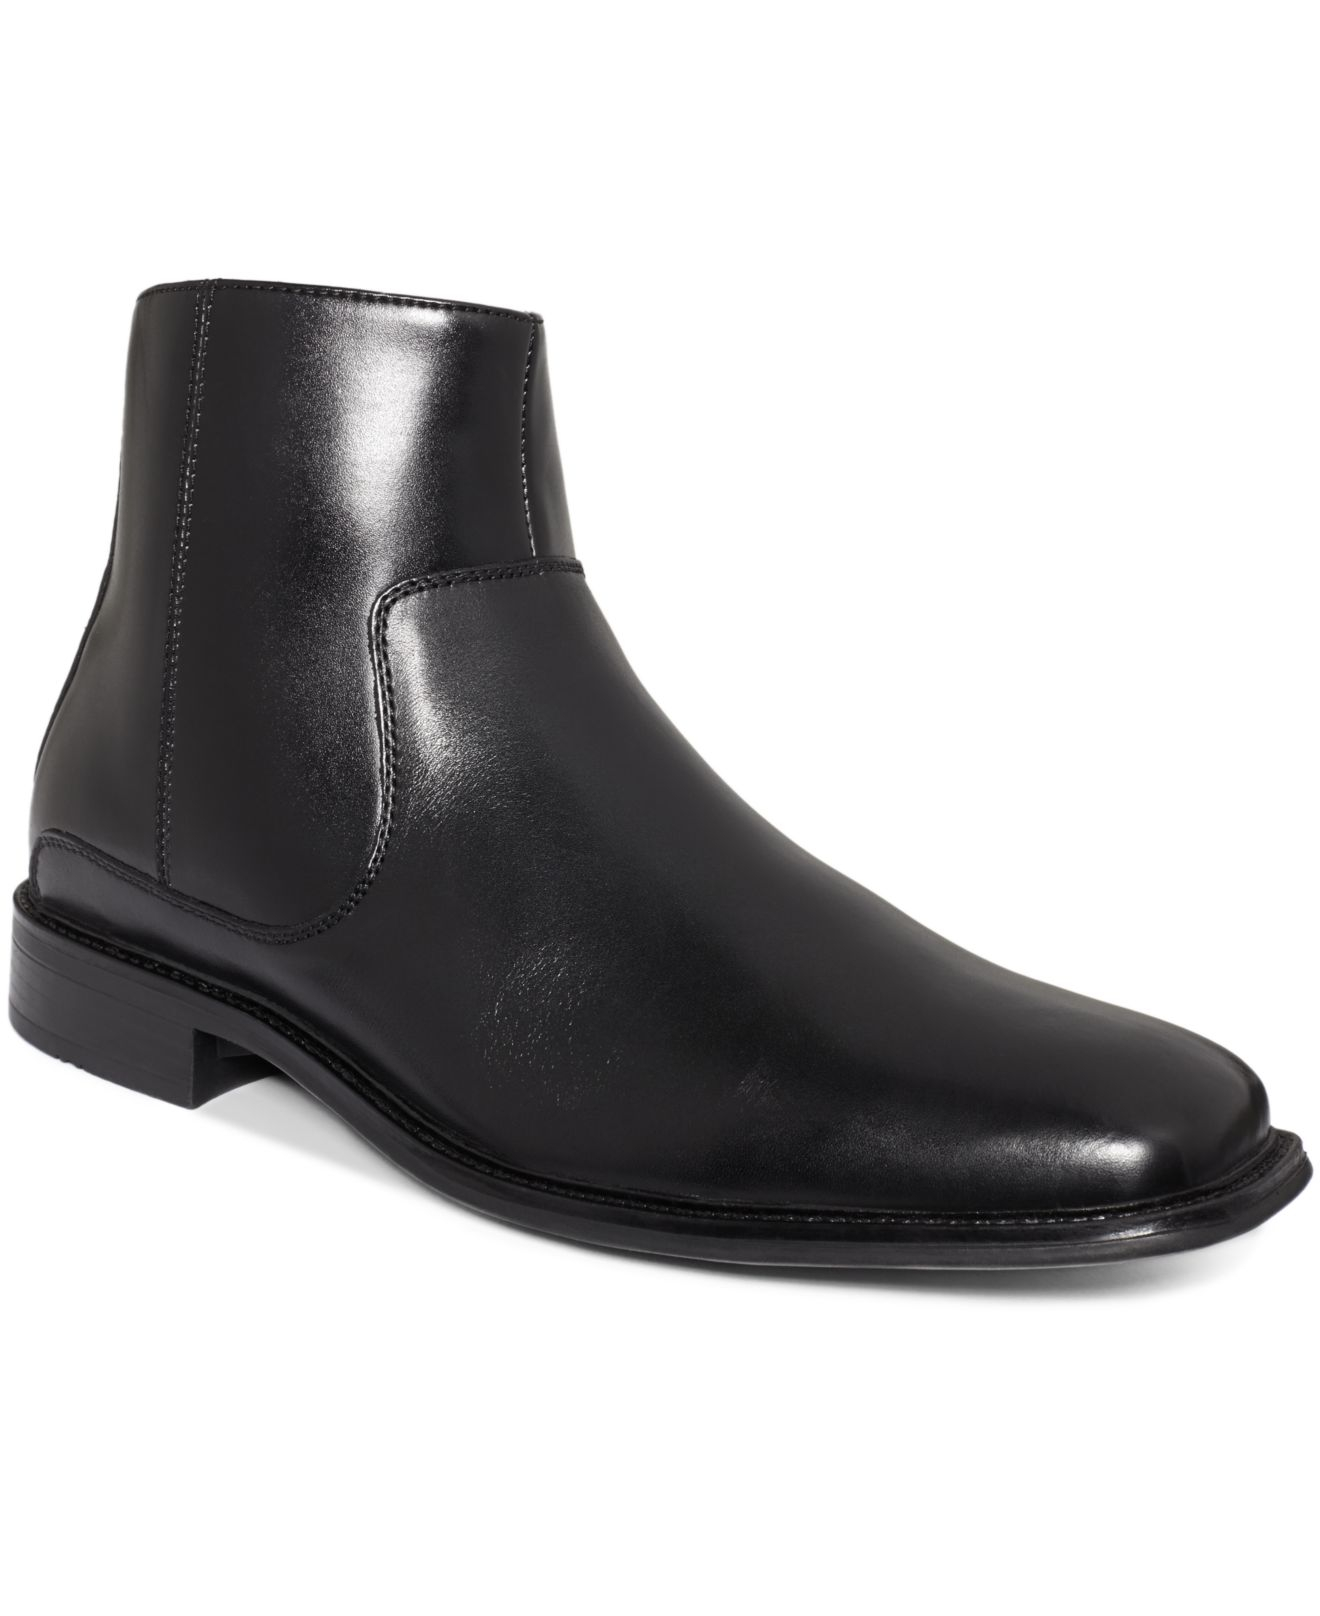 Lyst - Dockers Grant Side Zip Boots in Black for Men